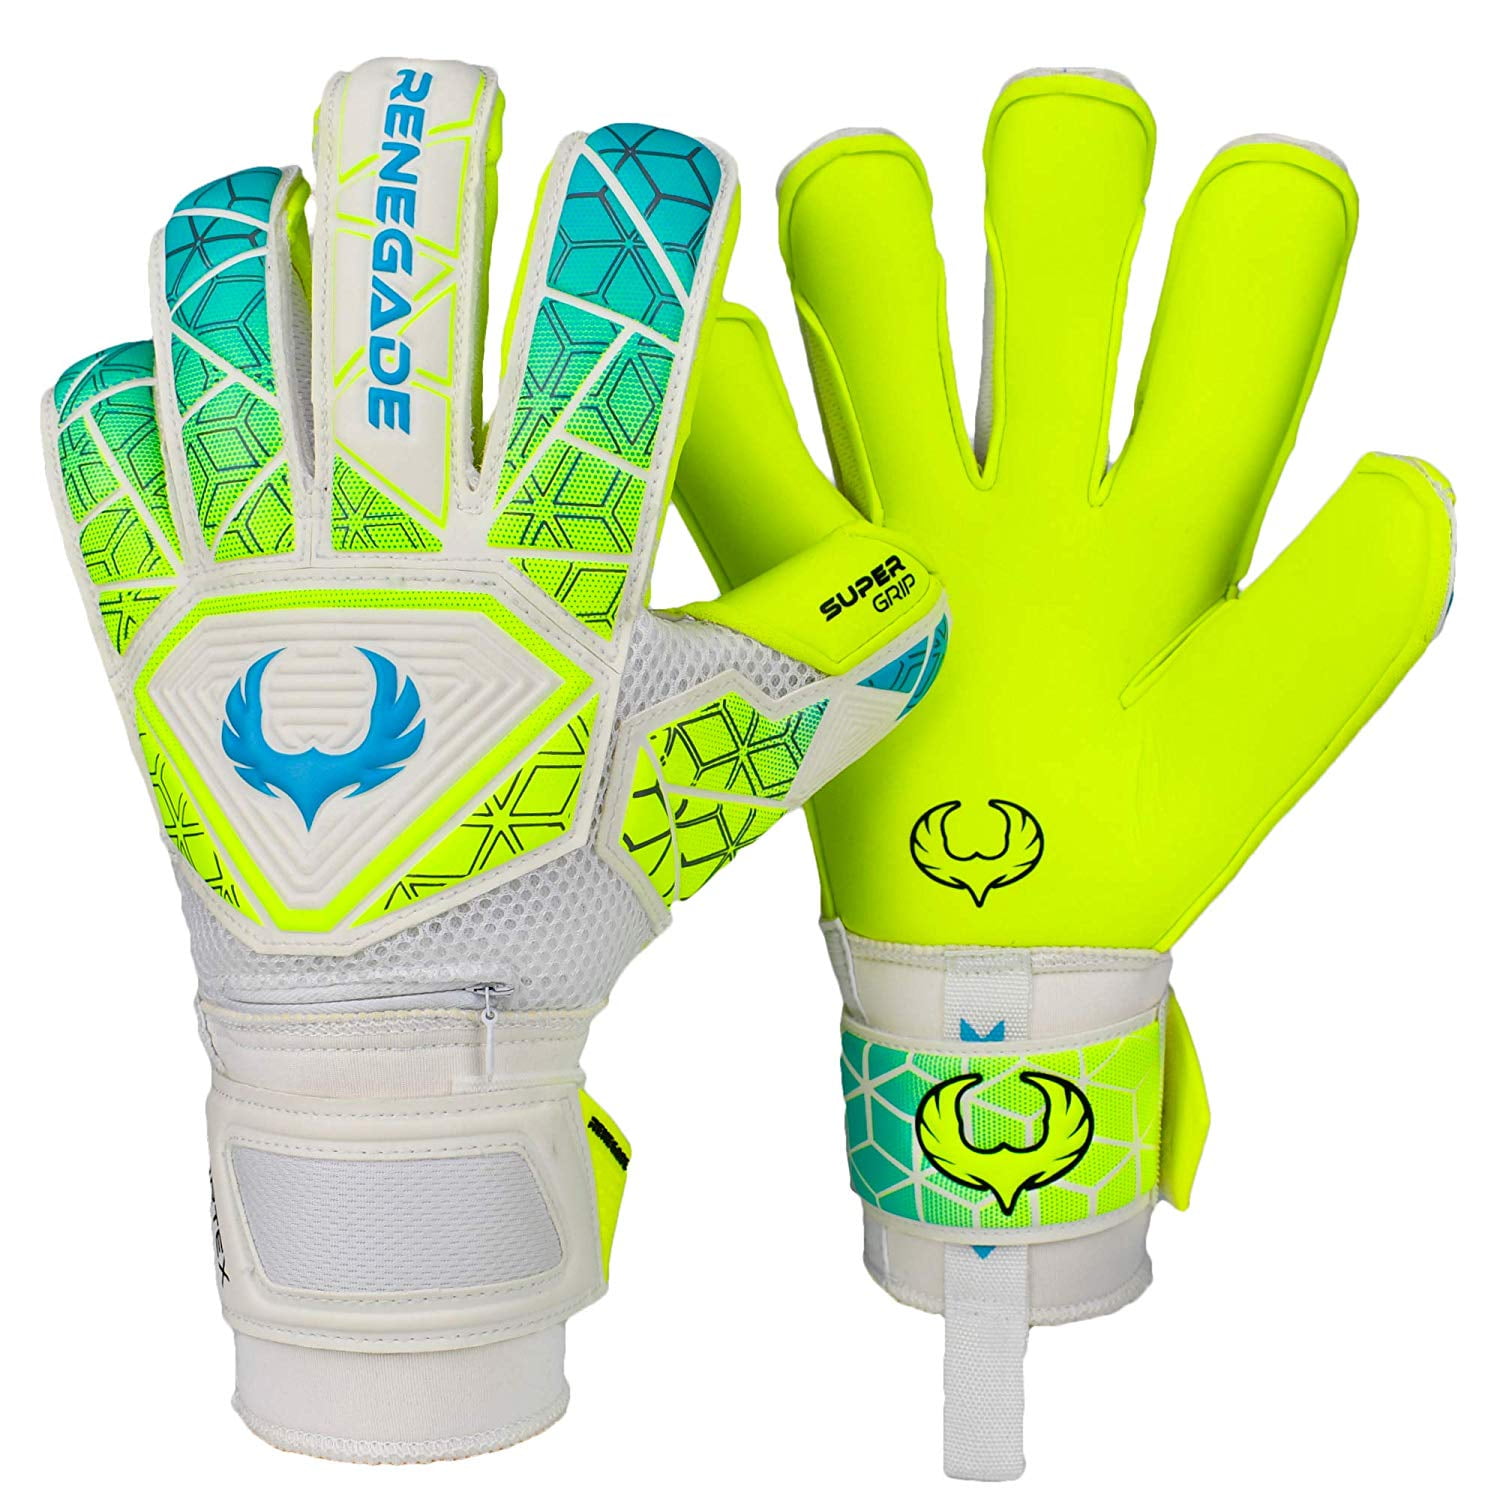 Unisex Goalkeeper Gloves Smart Fit –Soft Latex KIDS FOOTBALL GLOVES Goalkeeper Goalie Soccer Gloves Junior Children Youngsters Boys/Girls Premier League Soccer